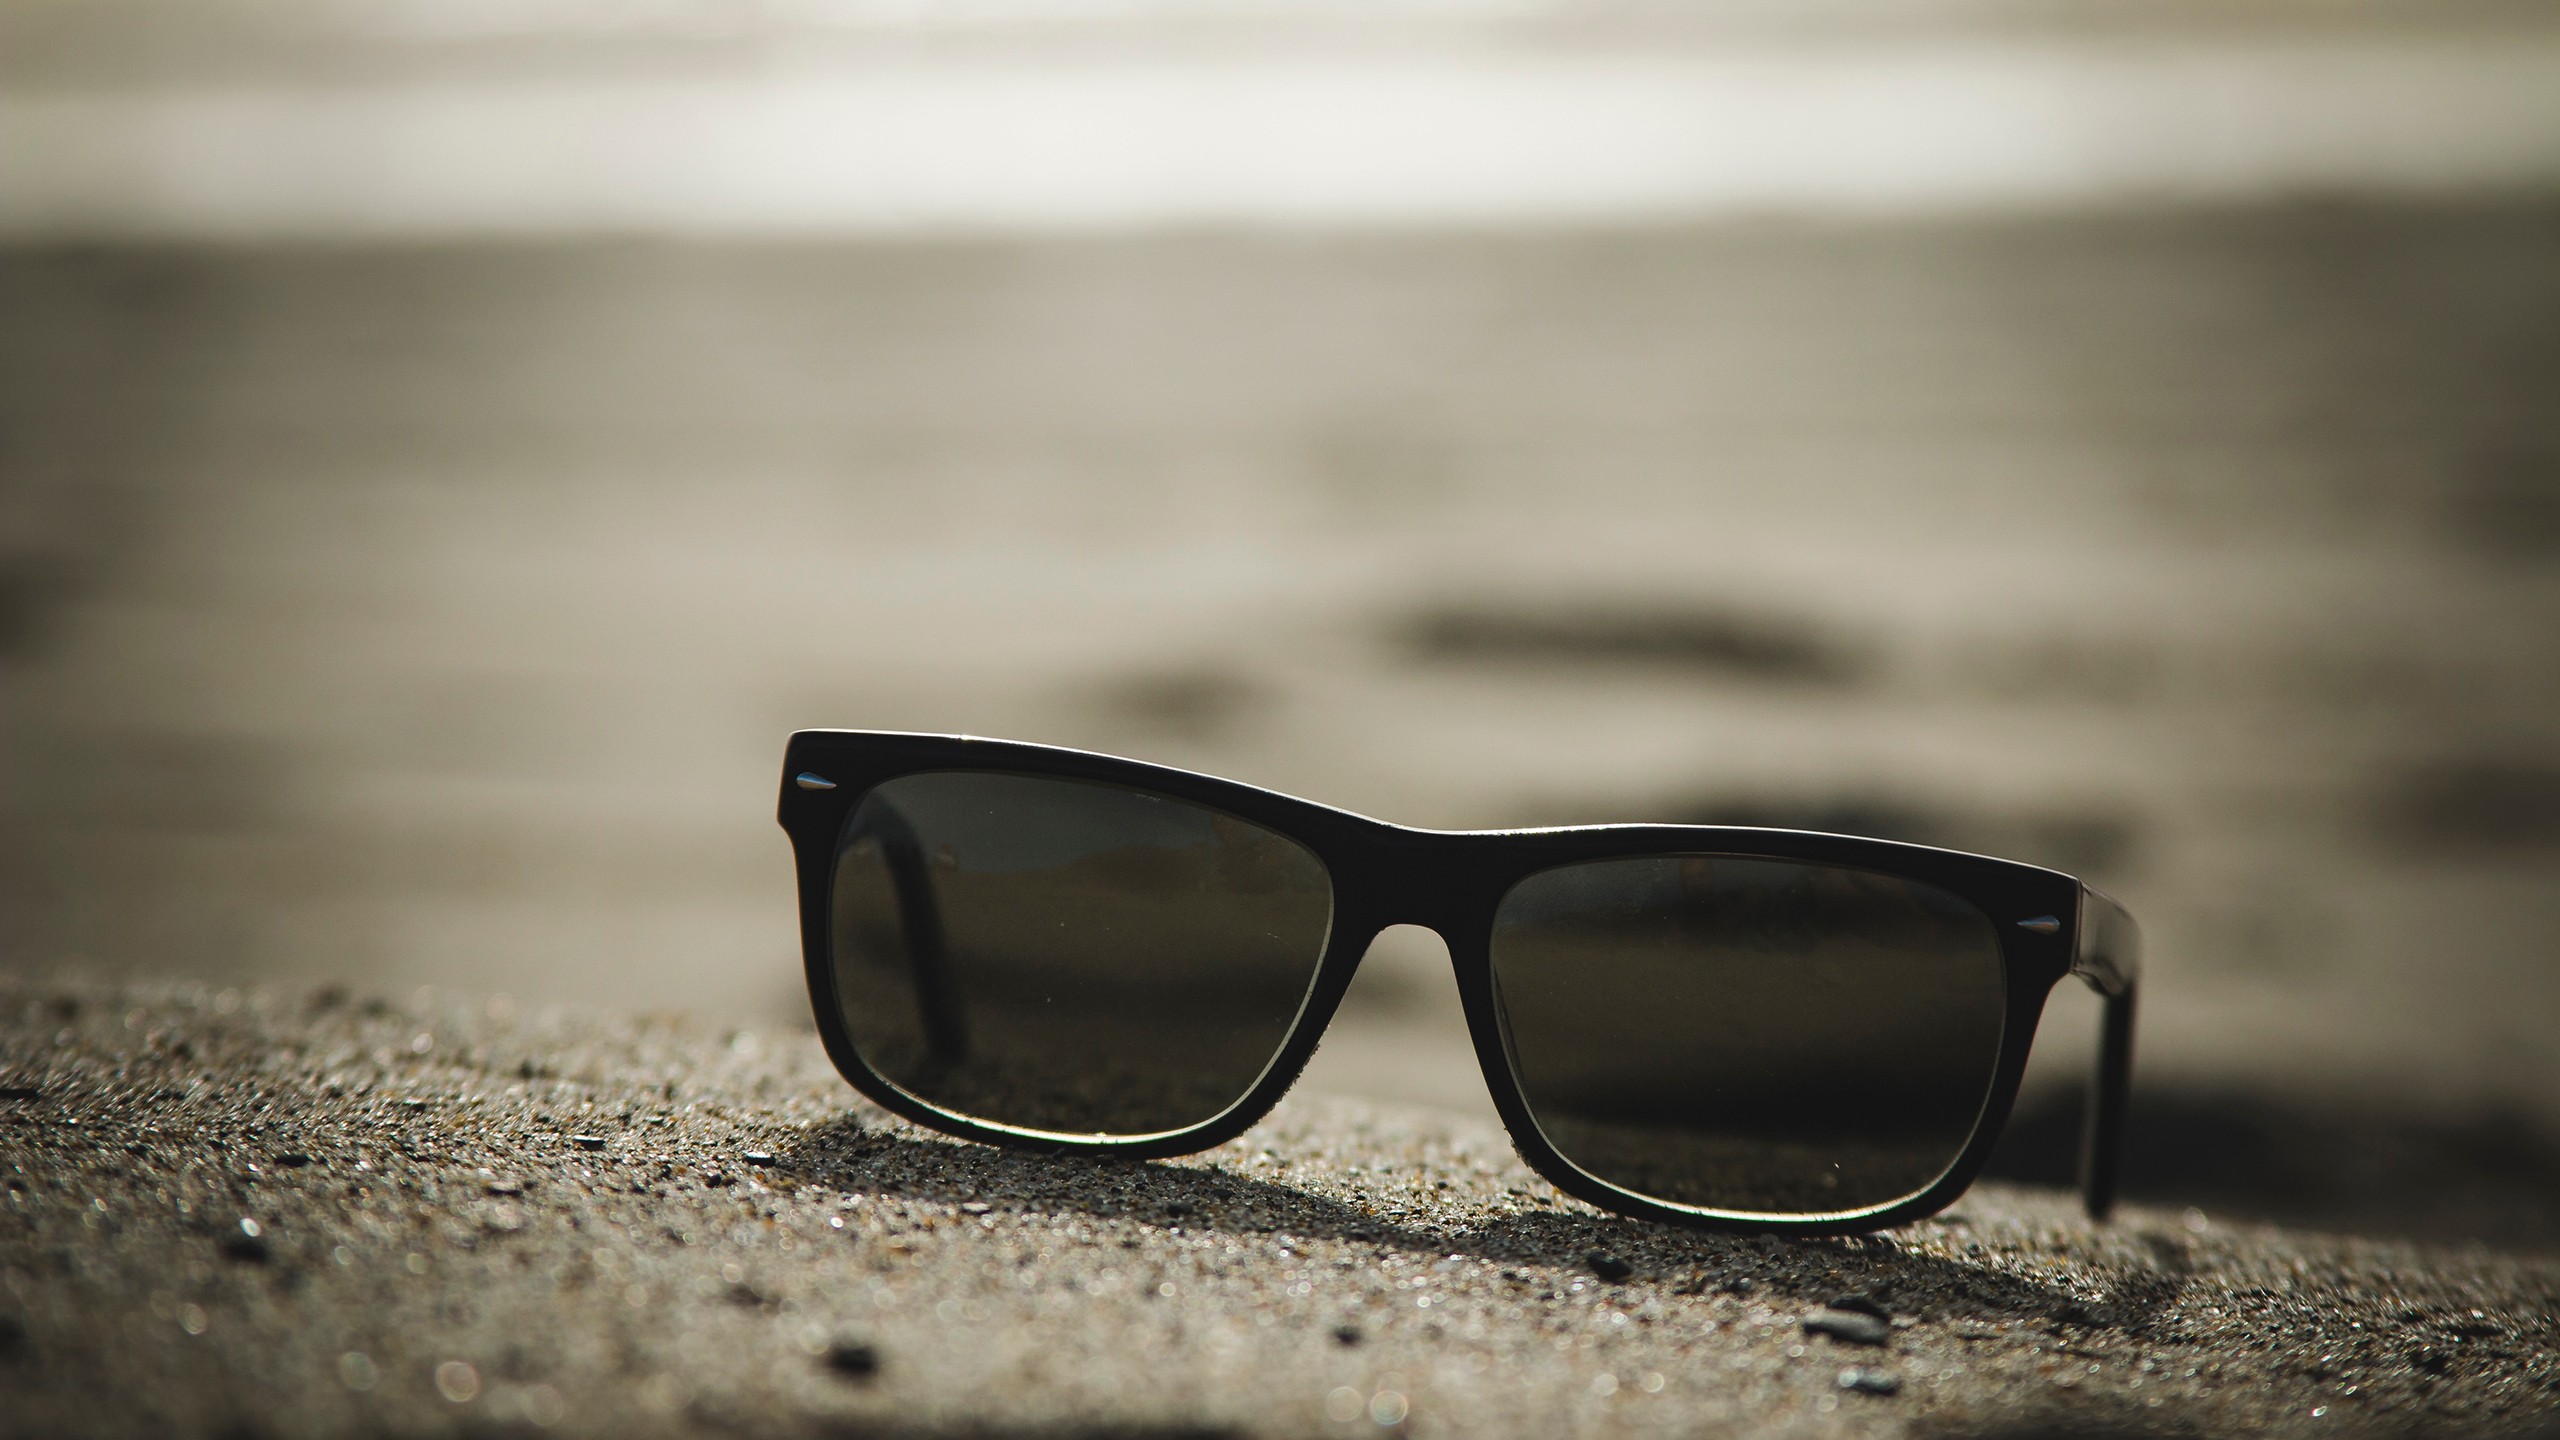 Photography Sunglasses Ray Ban Sand 2560x1440